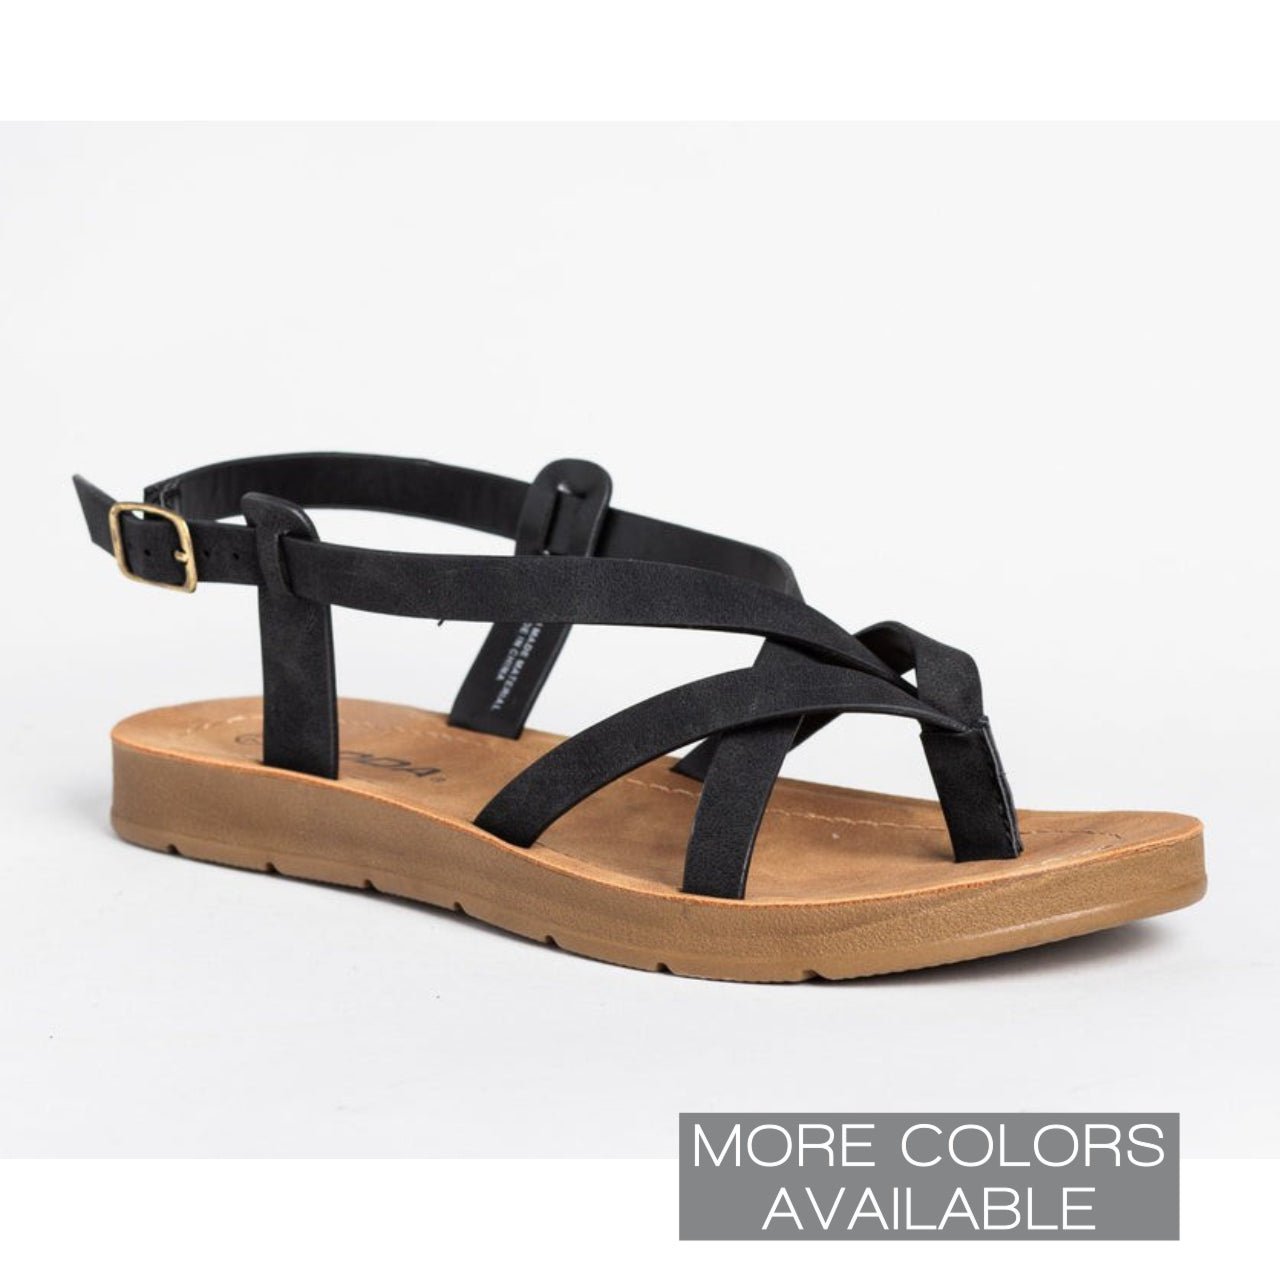 Jayda Criss Cross Sandals - The Graphic Tee